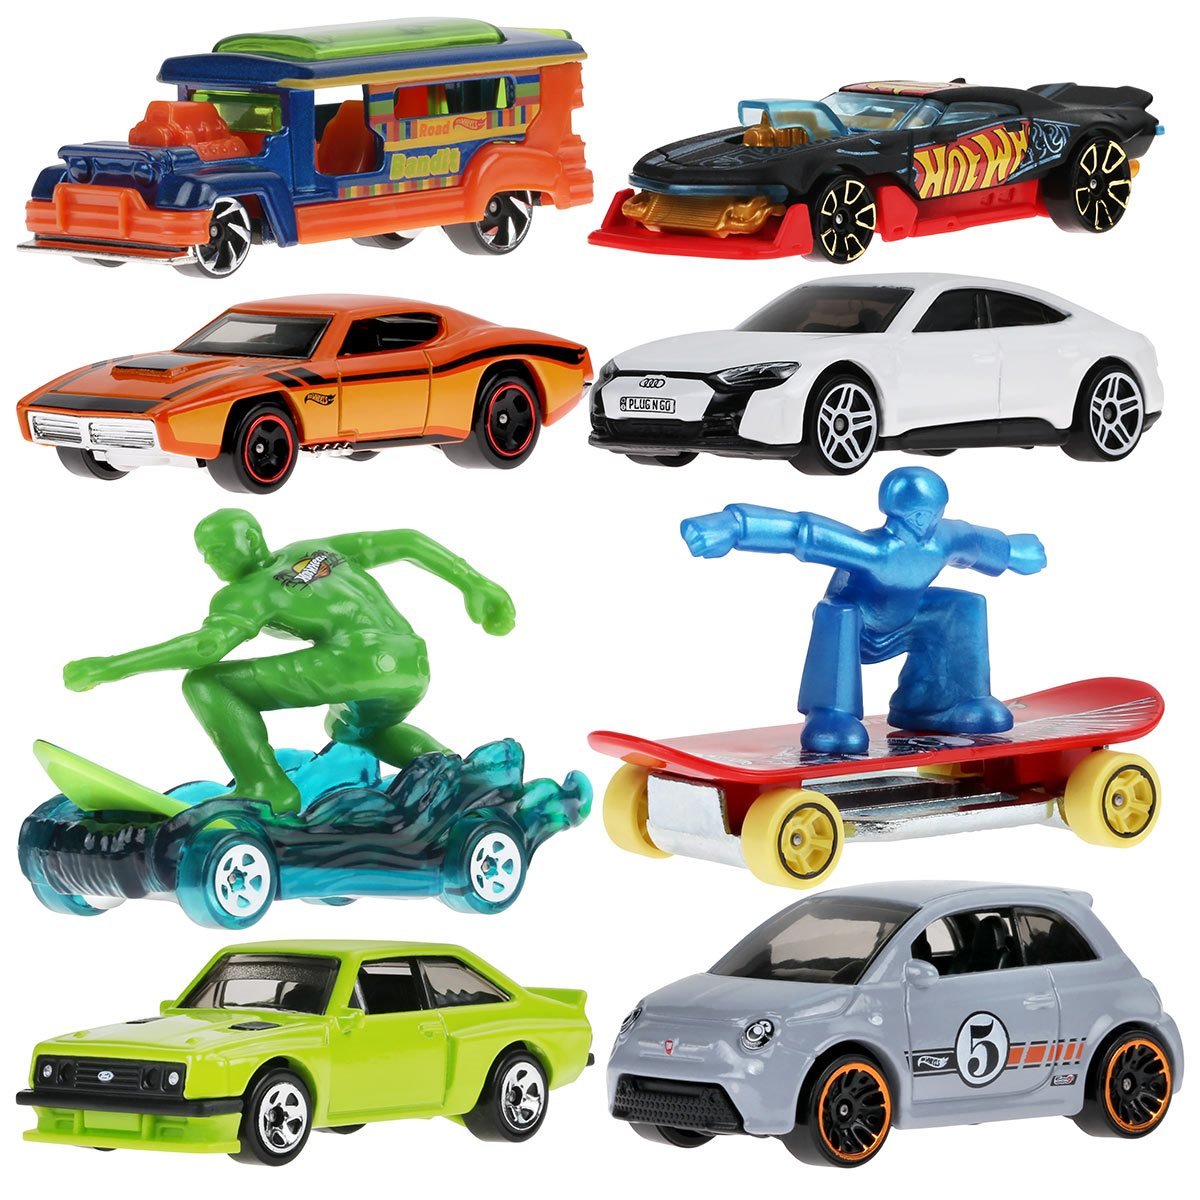 Mattel Hot Wheels 72 Count Die-Cast Toy Cars France